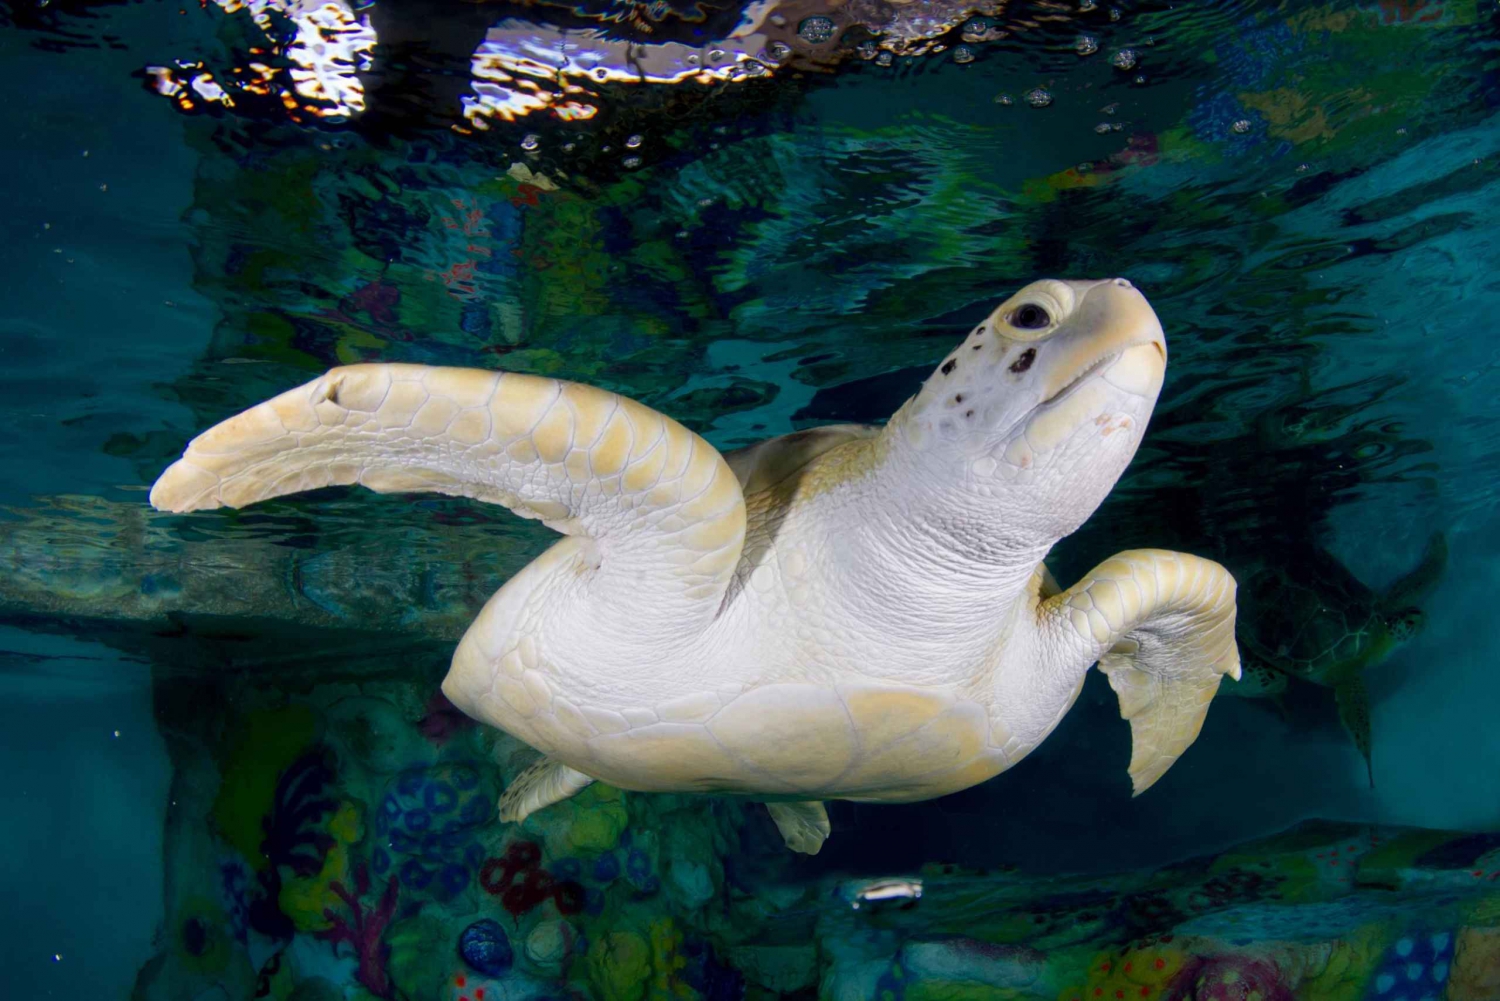 Clearwater: Eco-Certified Marine Aquarium General Admission